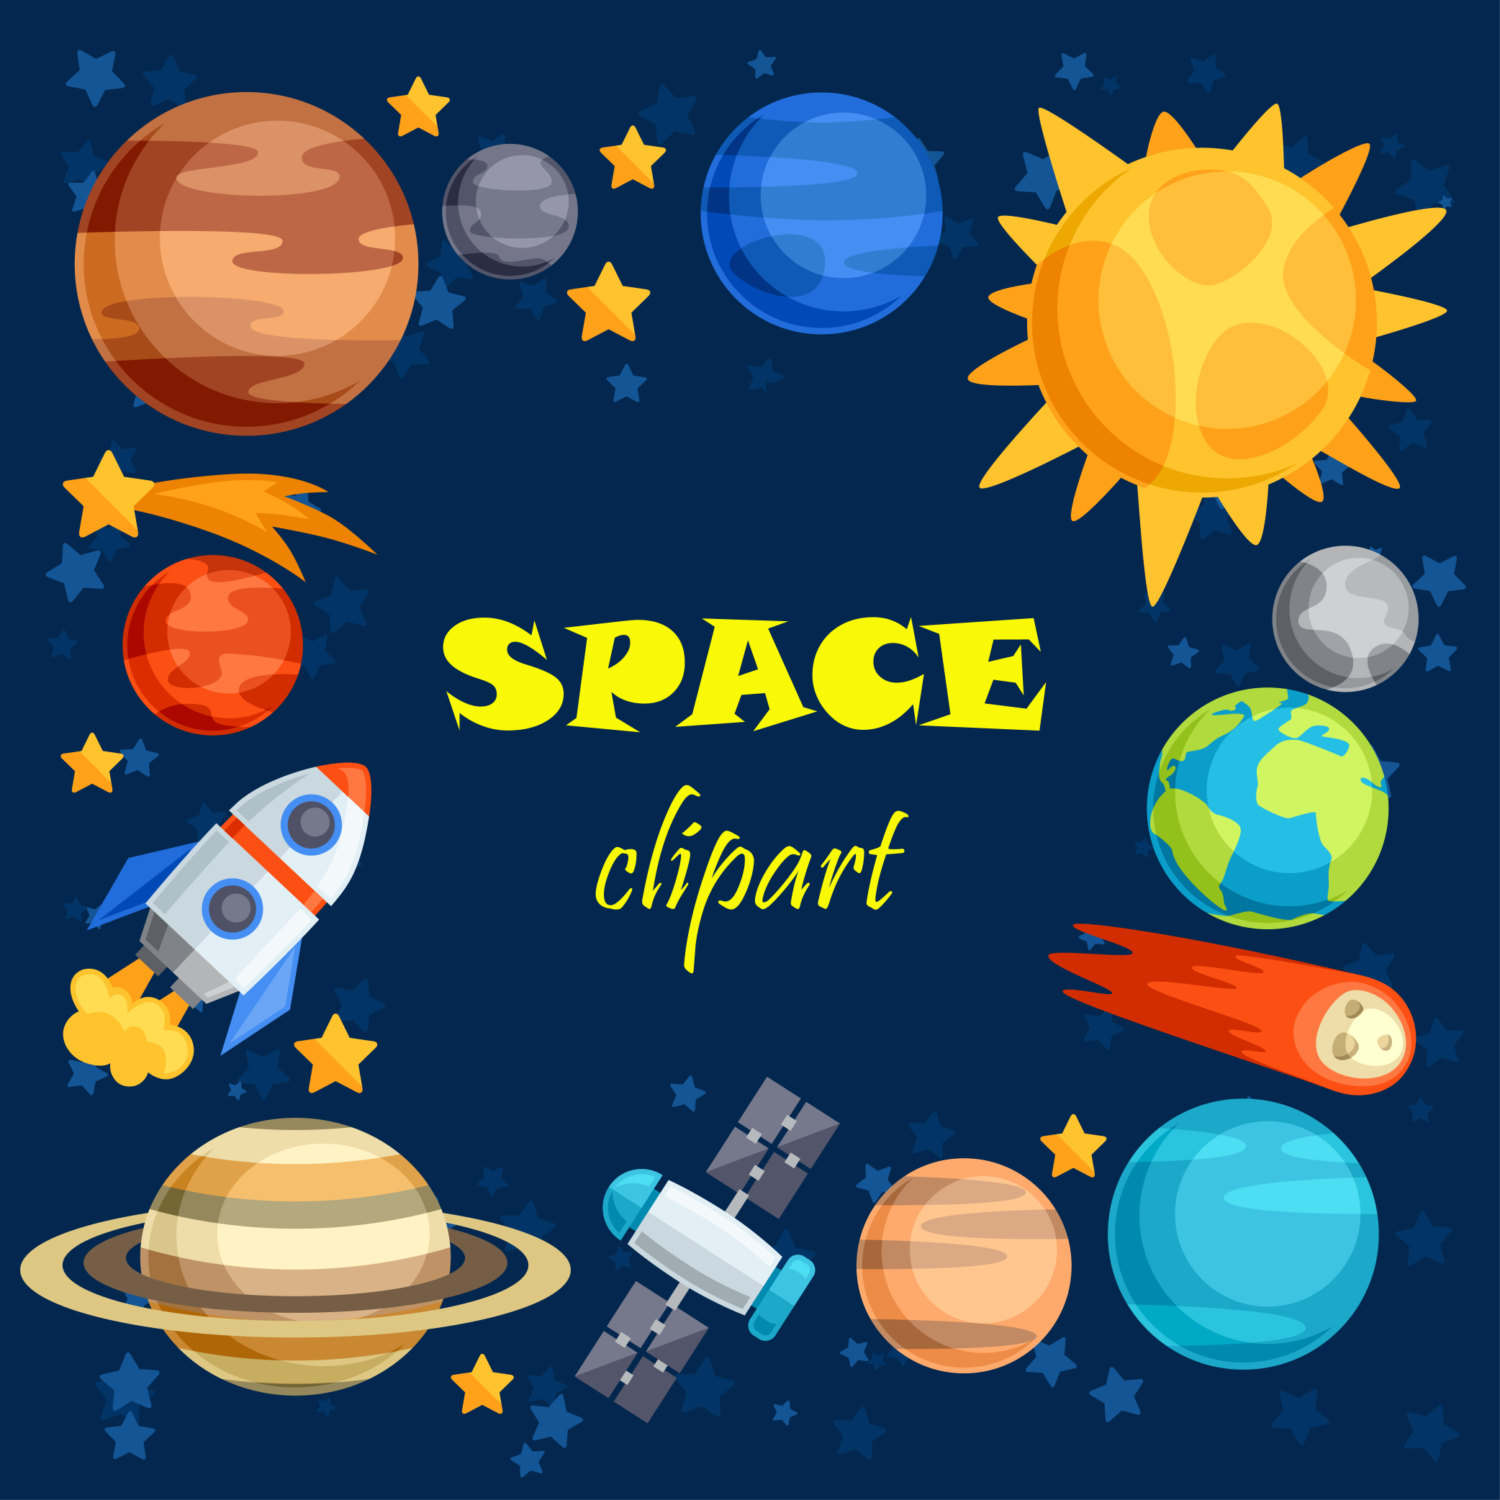 Space clip art. Outer space. Outer space clipart. Planet clipart. Rocket clipart.